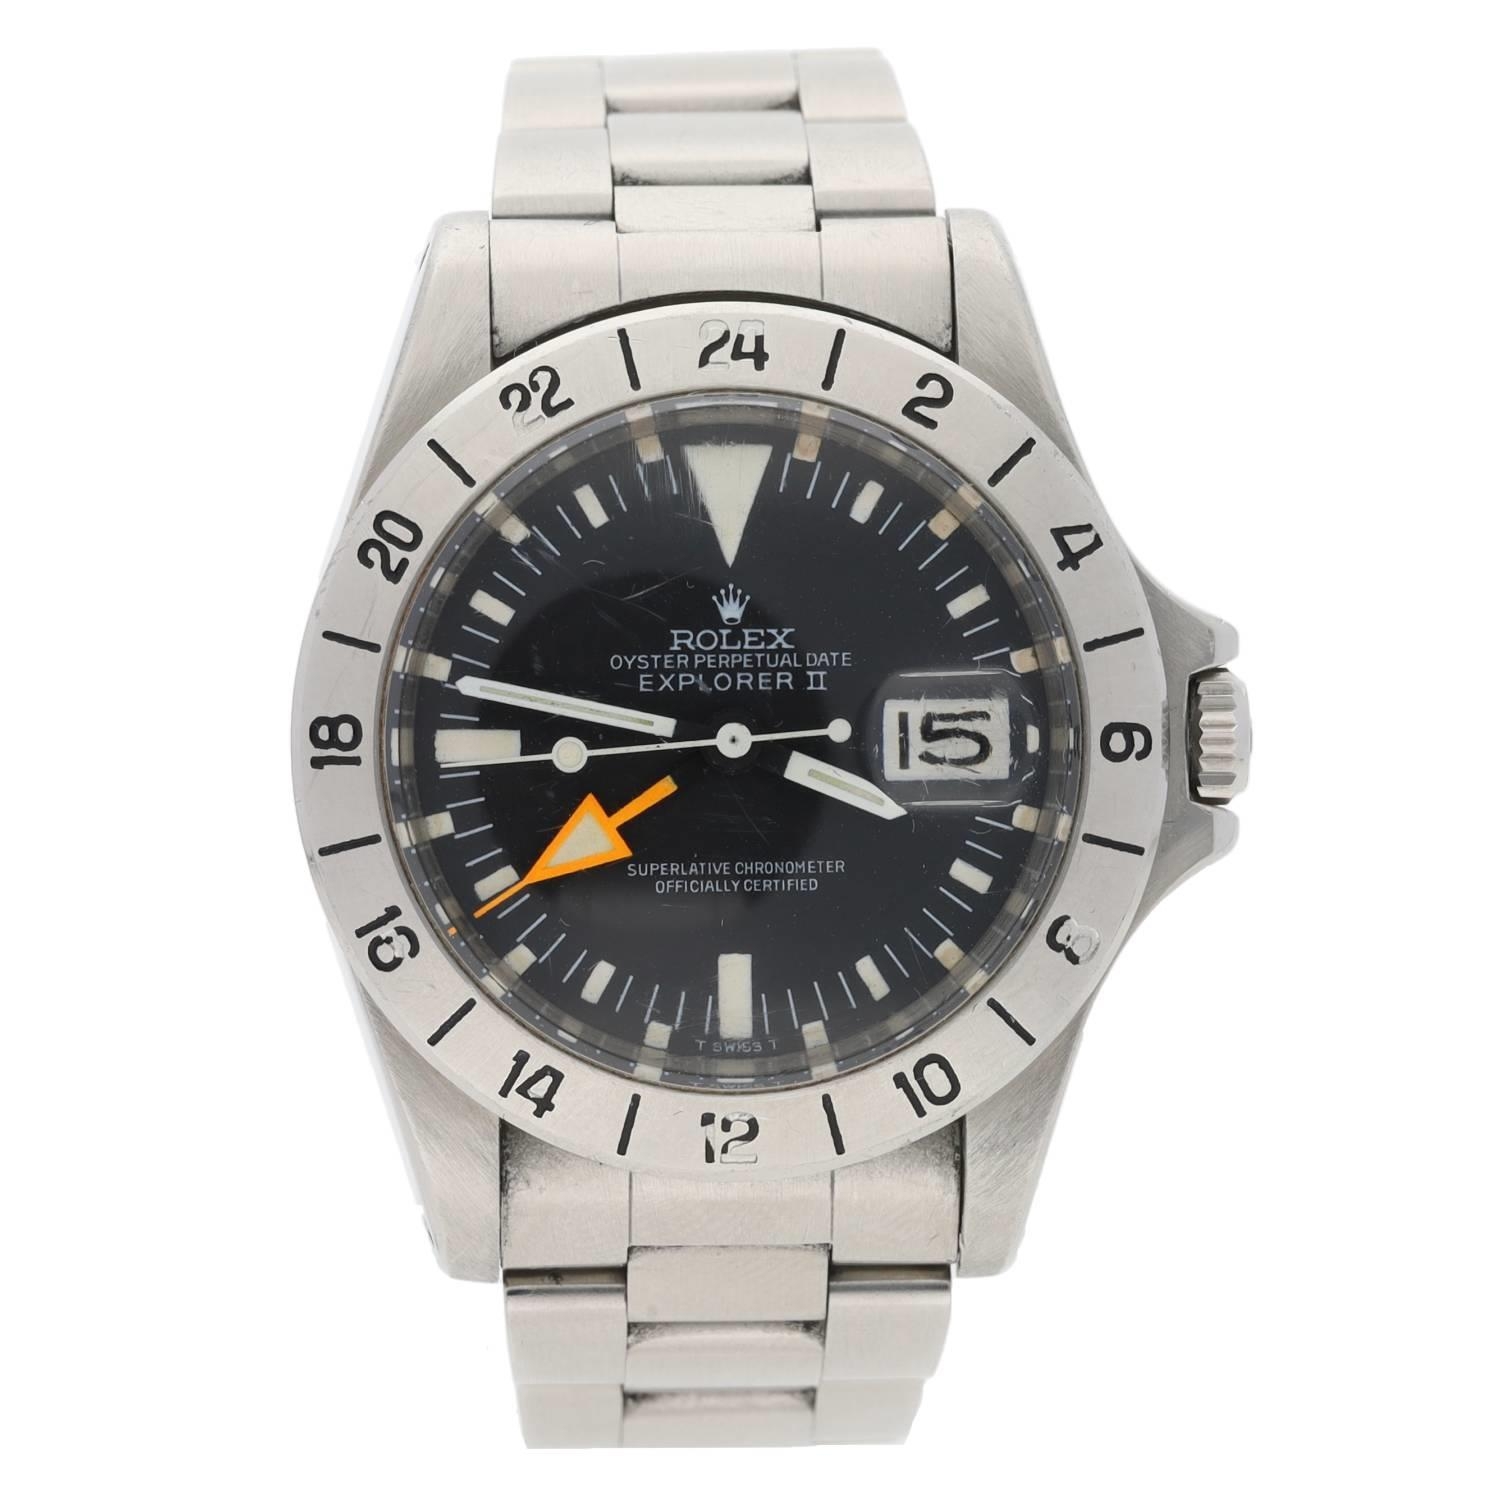 Rolex Oyster Perpetual Date Explorer II 'Steve McQueen' stainless steel gentleman's wristwatch,